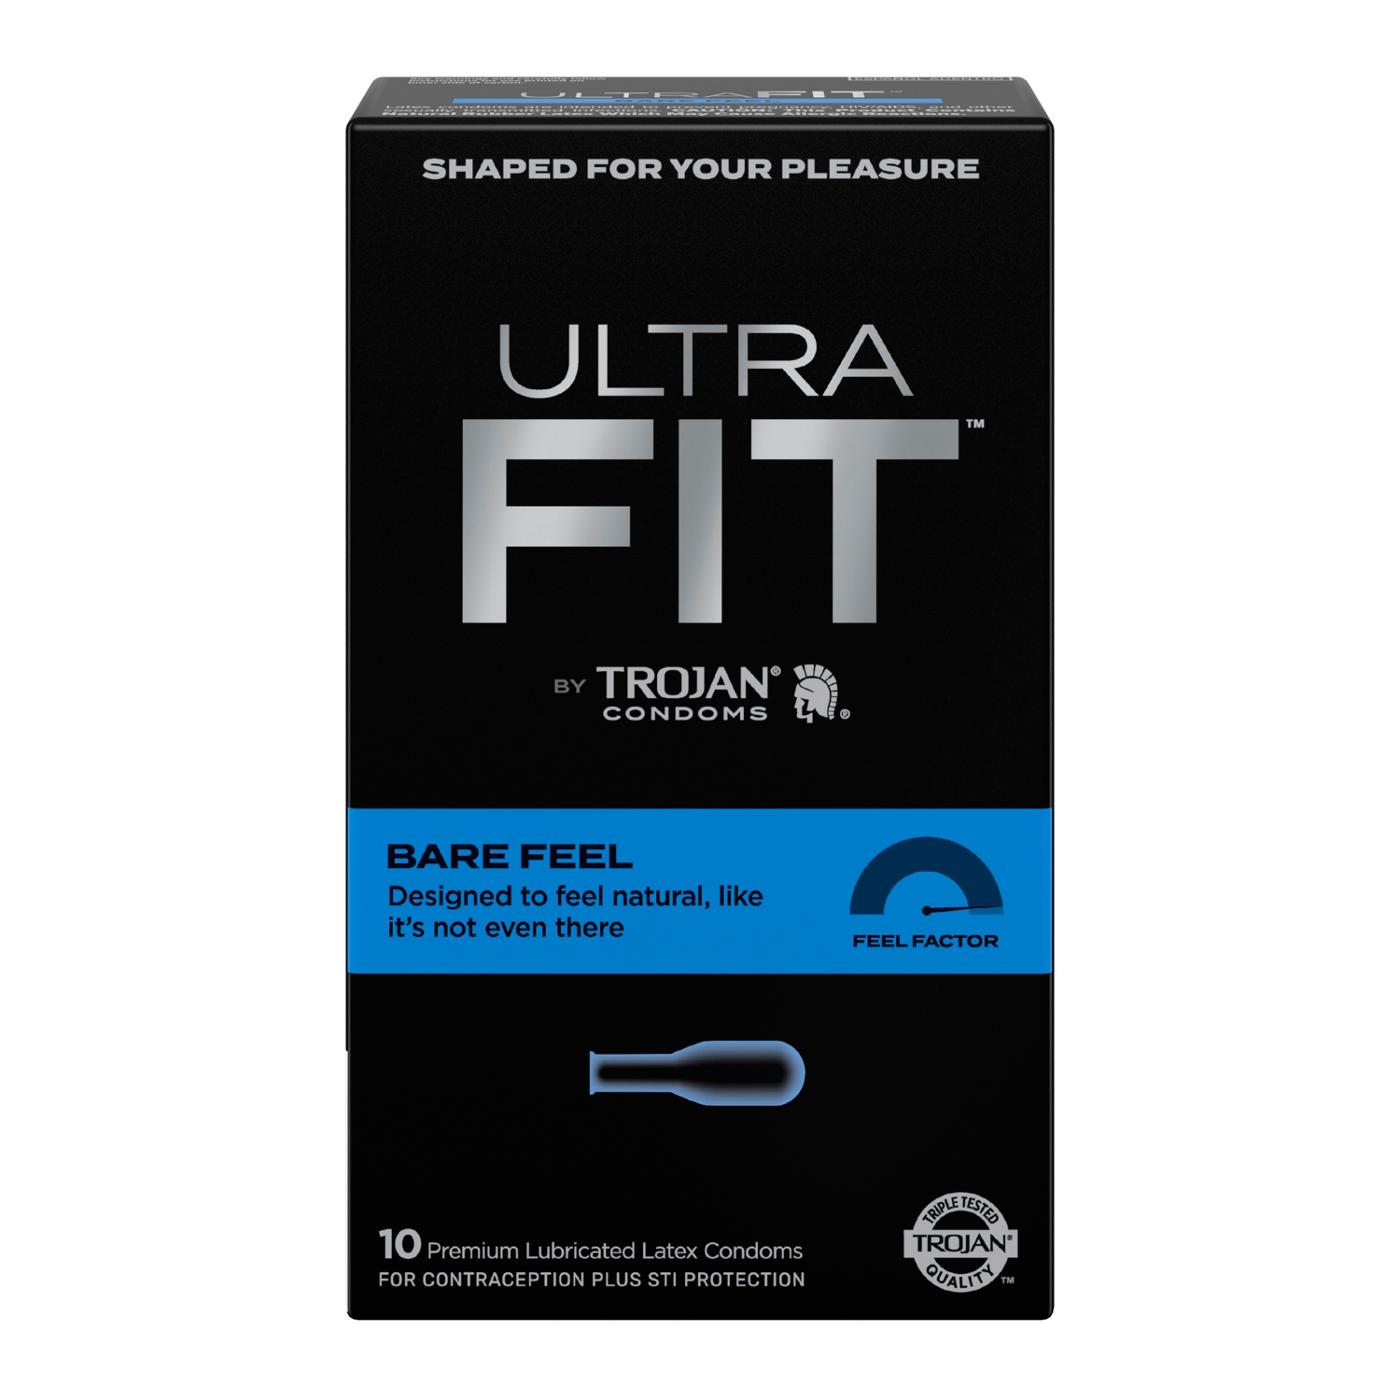 Trojan Ultra Fit Bare Feel Latex Condoms; image 1 of 2